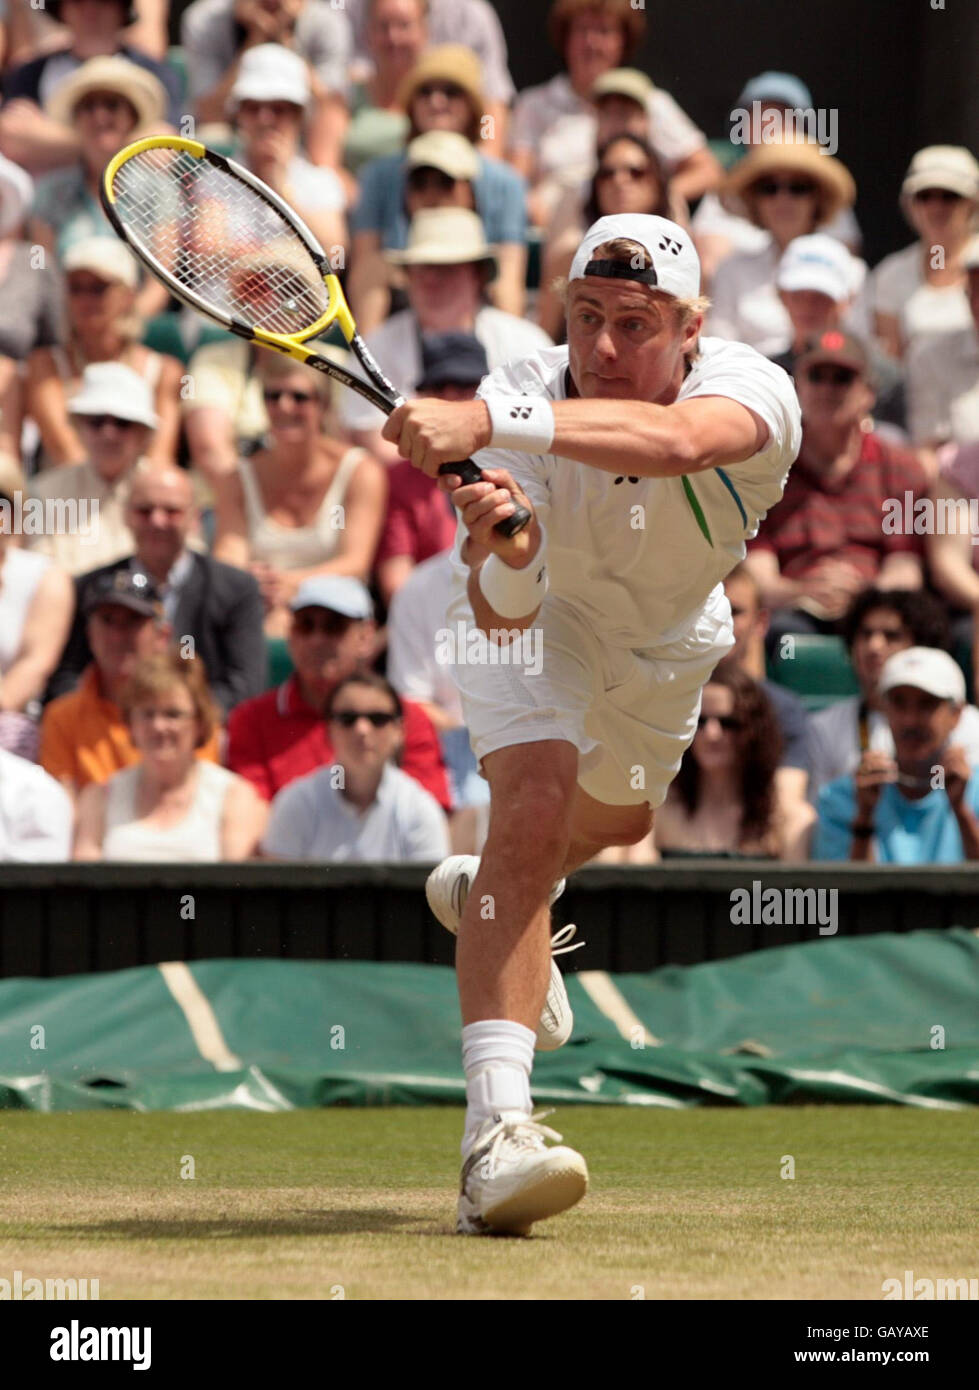 Lleyton Hewitt in Australia contro Roger Federer in Svizzera durante i Wimbledon Championships 2008 presso l'All England Tennis Club di Wimbledon. Foto Stock